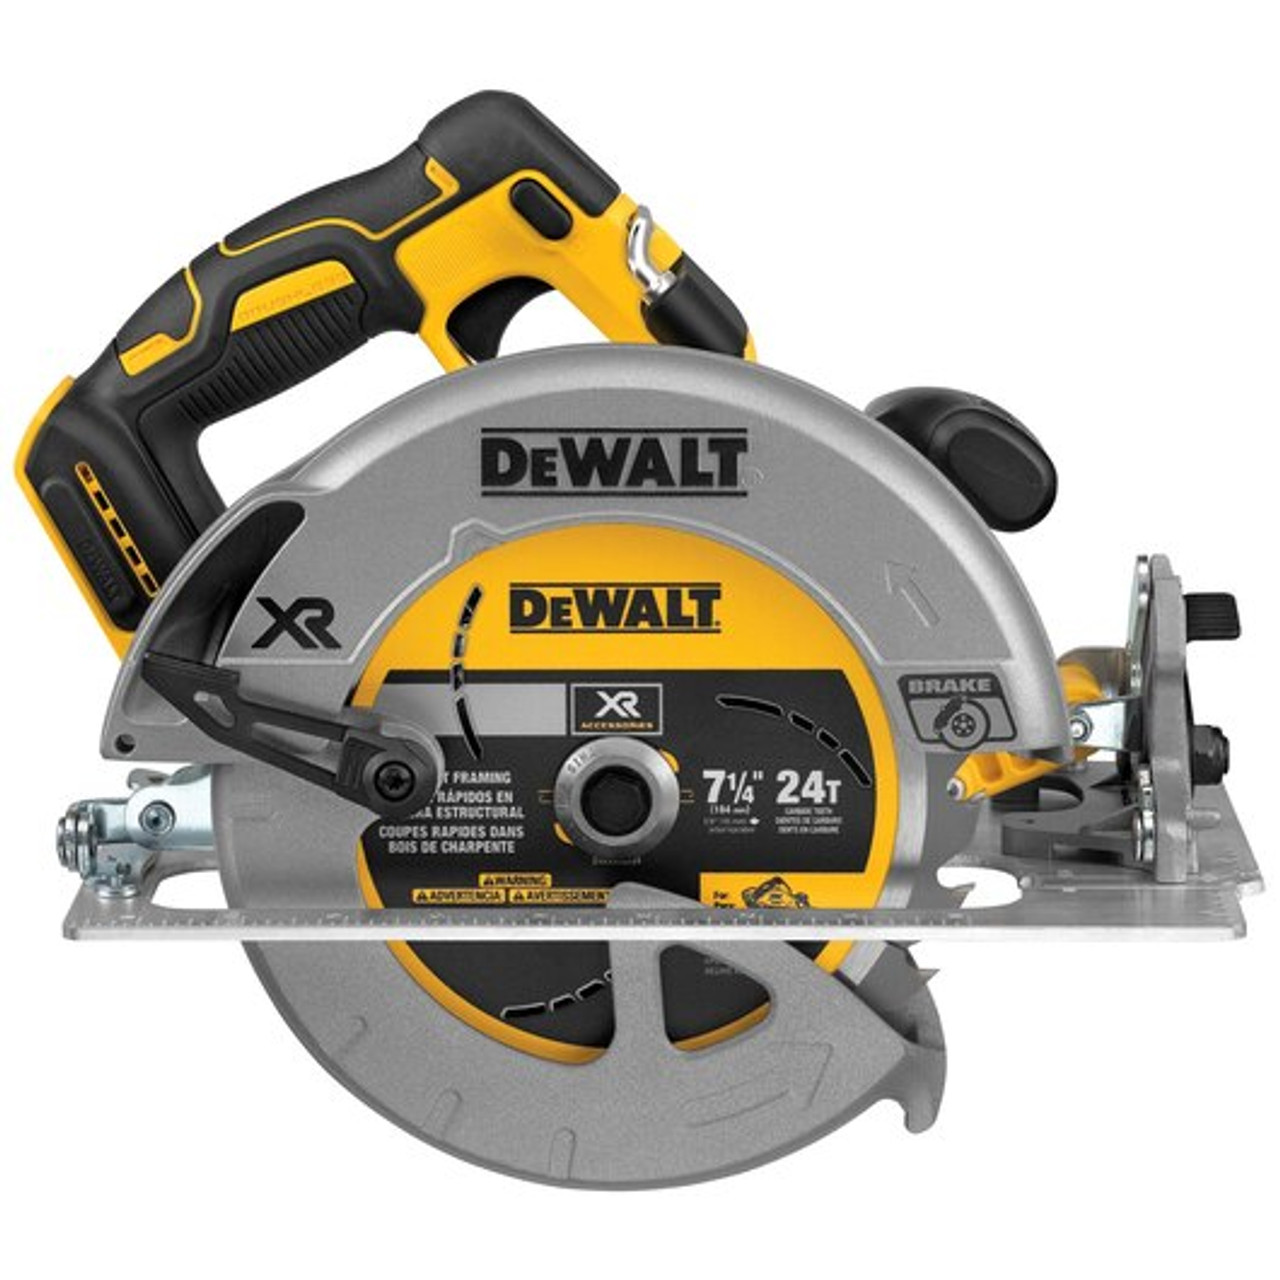 Dewalt DCS570B 20V MAX 7-1/4" Cordless Circular Saw Tool Only